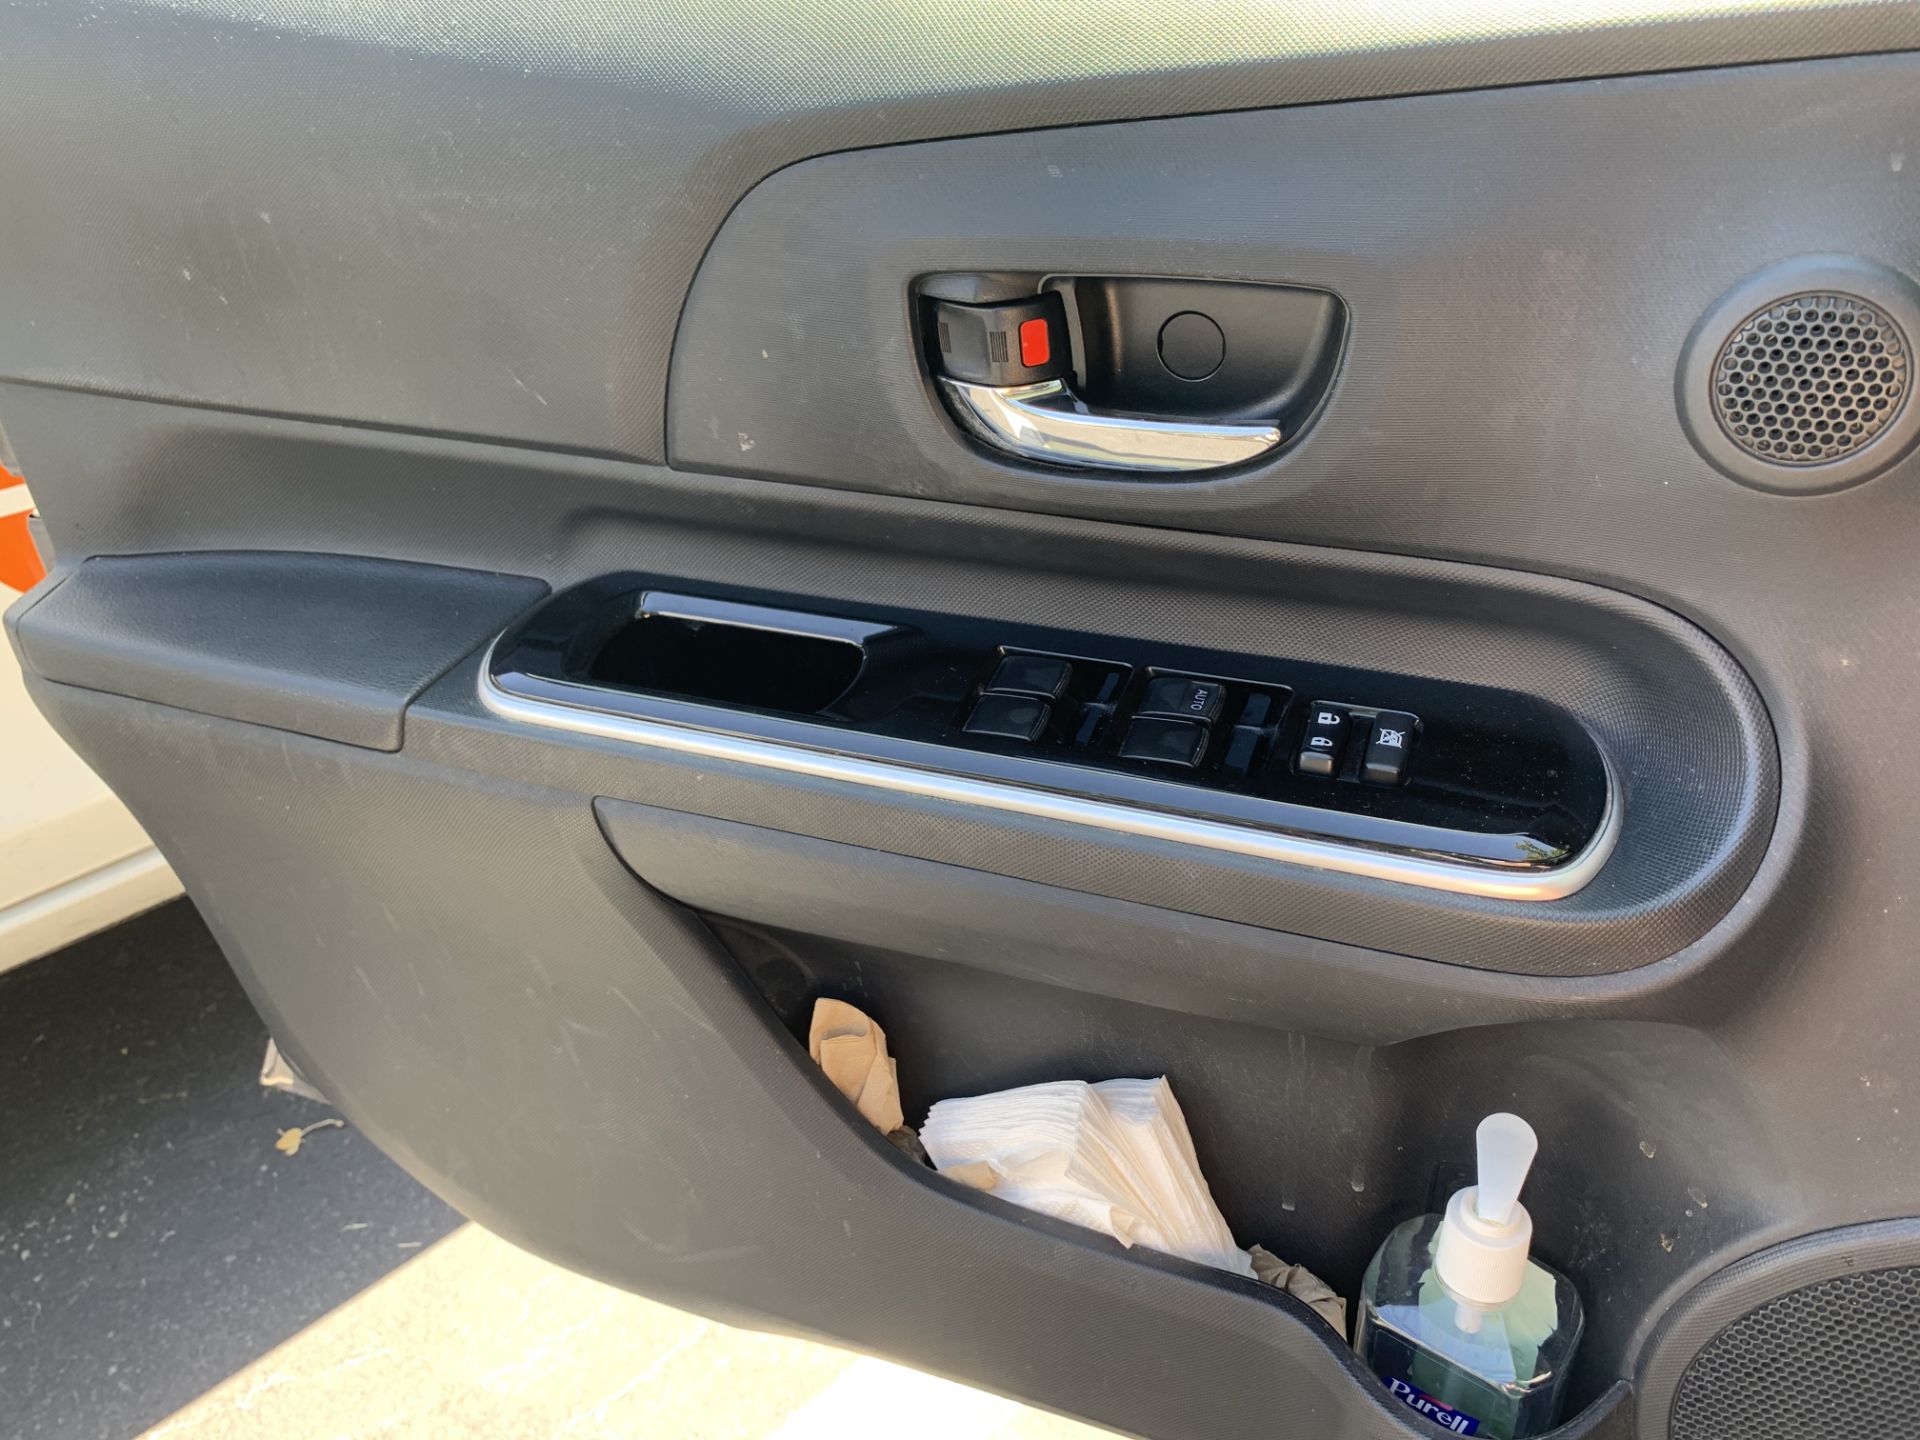 2015 Toyota Prius C, Auto Transmission, L4 1.5 Liter, DOHC 16V, AM/FM CD, Cruise, AC, Power Doors - Image 14 of 15